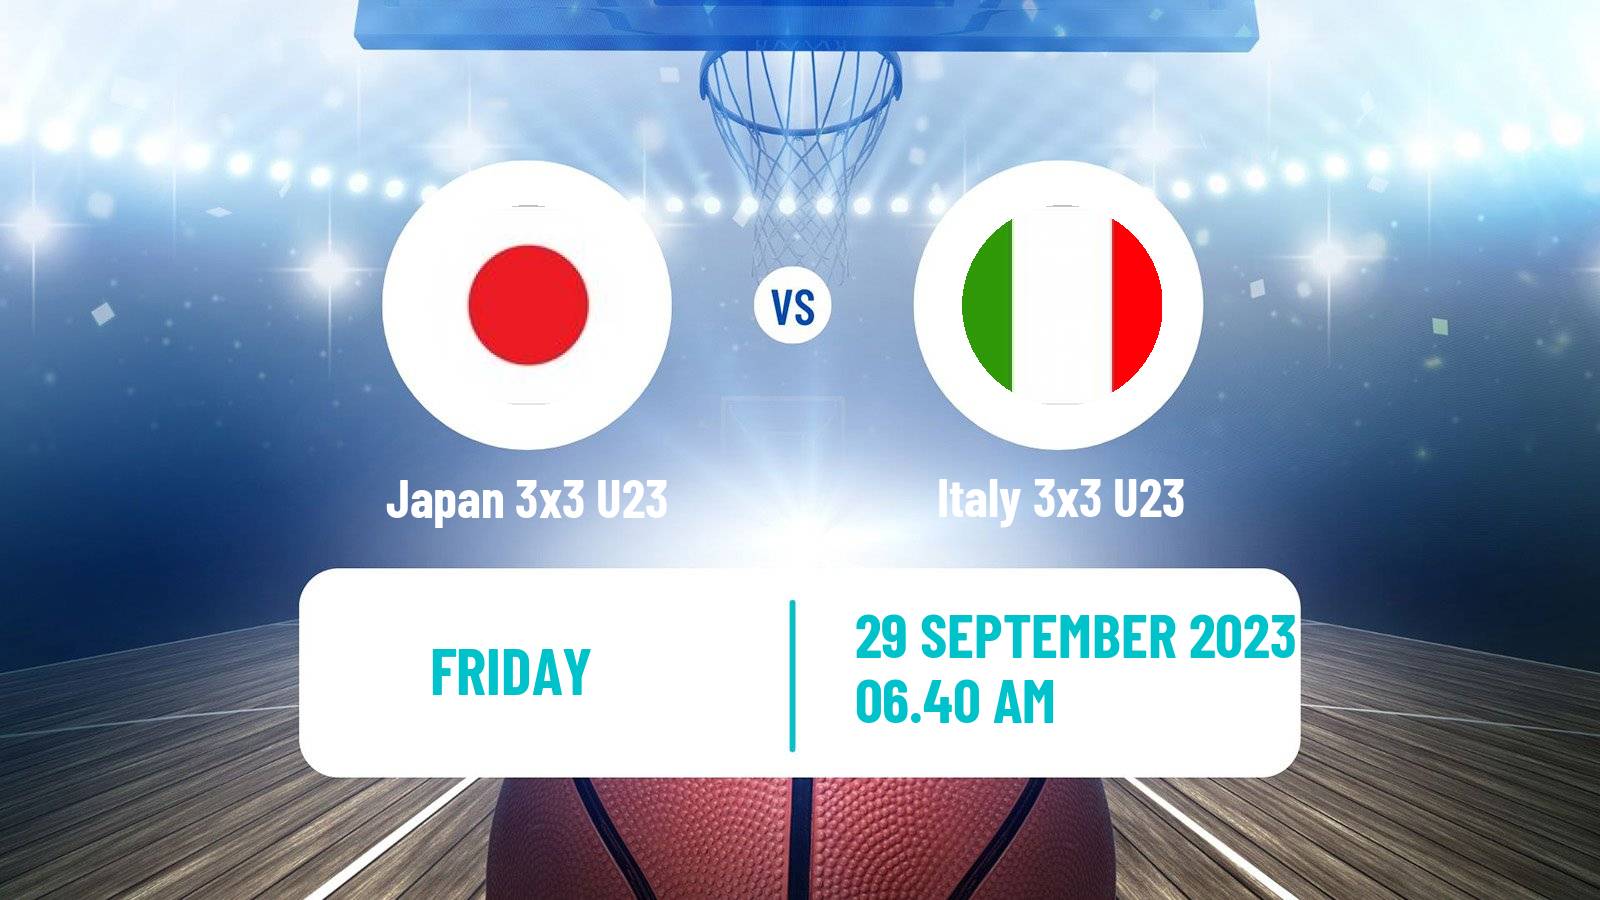 Basketball World Cup Basketball 3x3 U23 Japan 3x3 U23 - Italy 3x3 U23